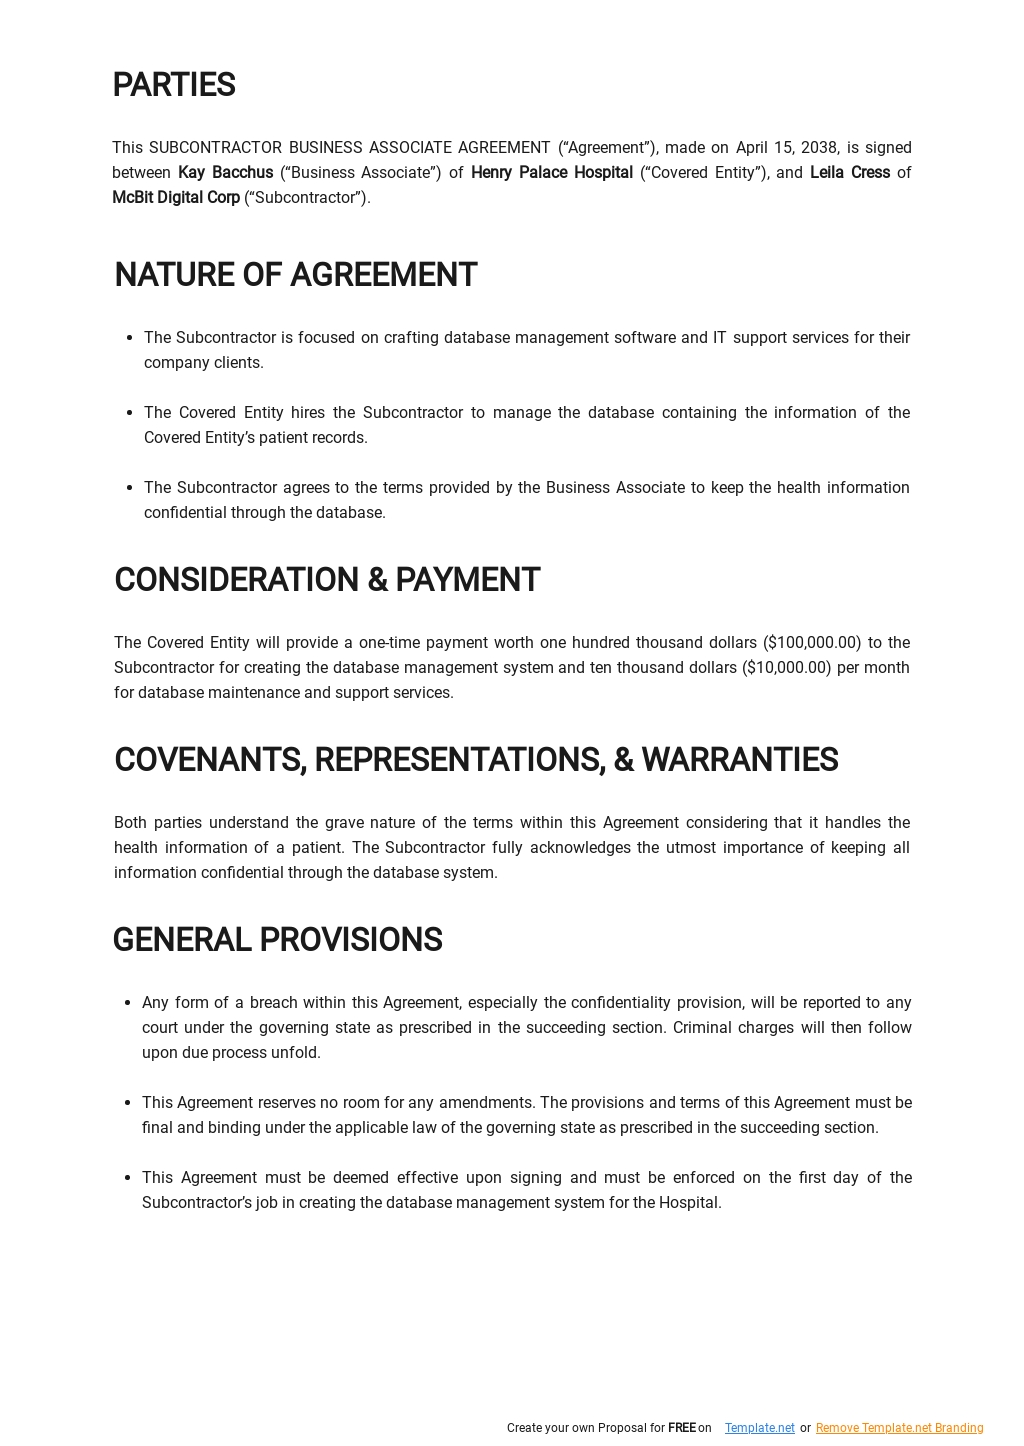 Subcontractor Business Associate Agreement Template 1.jpe